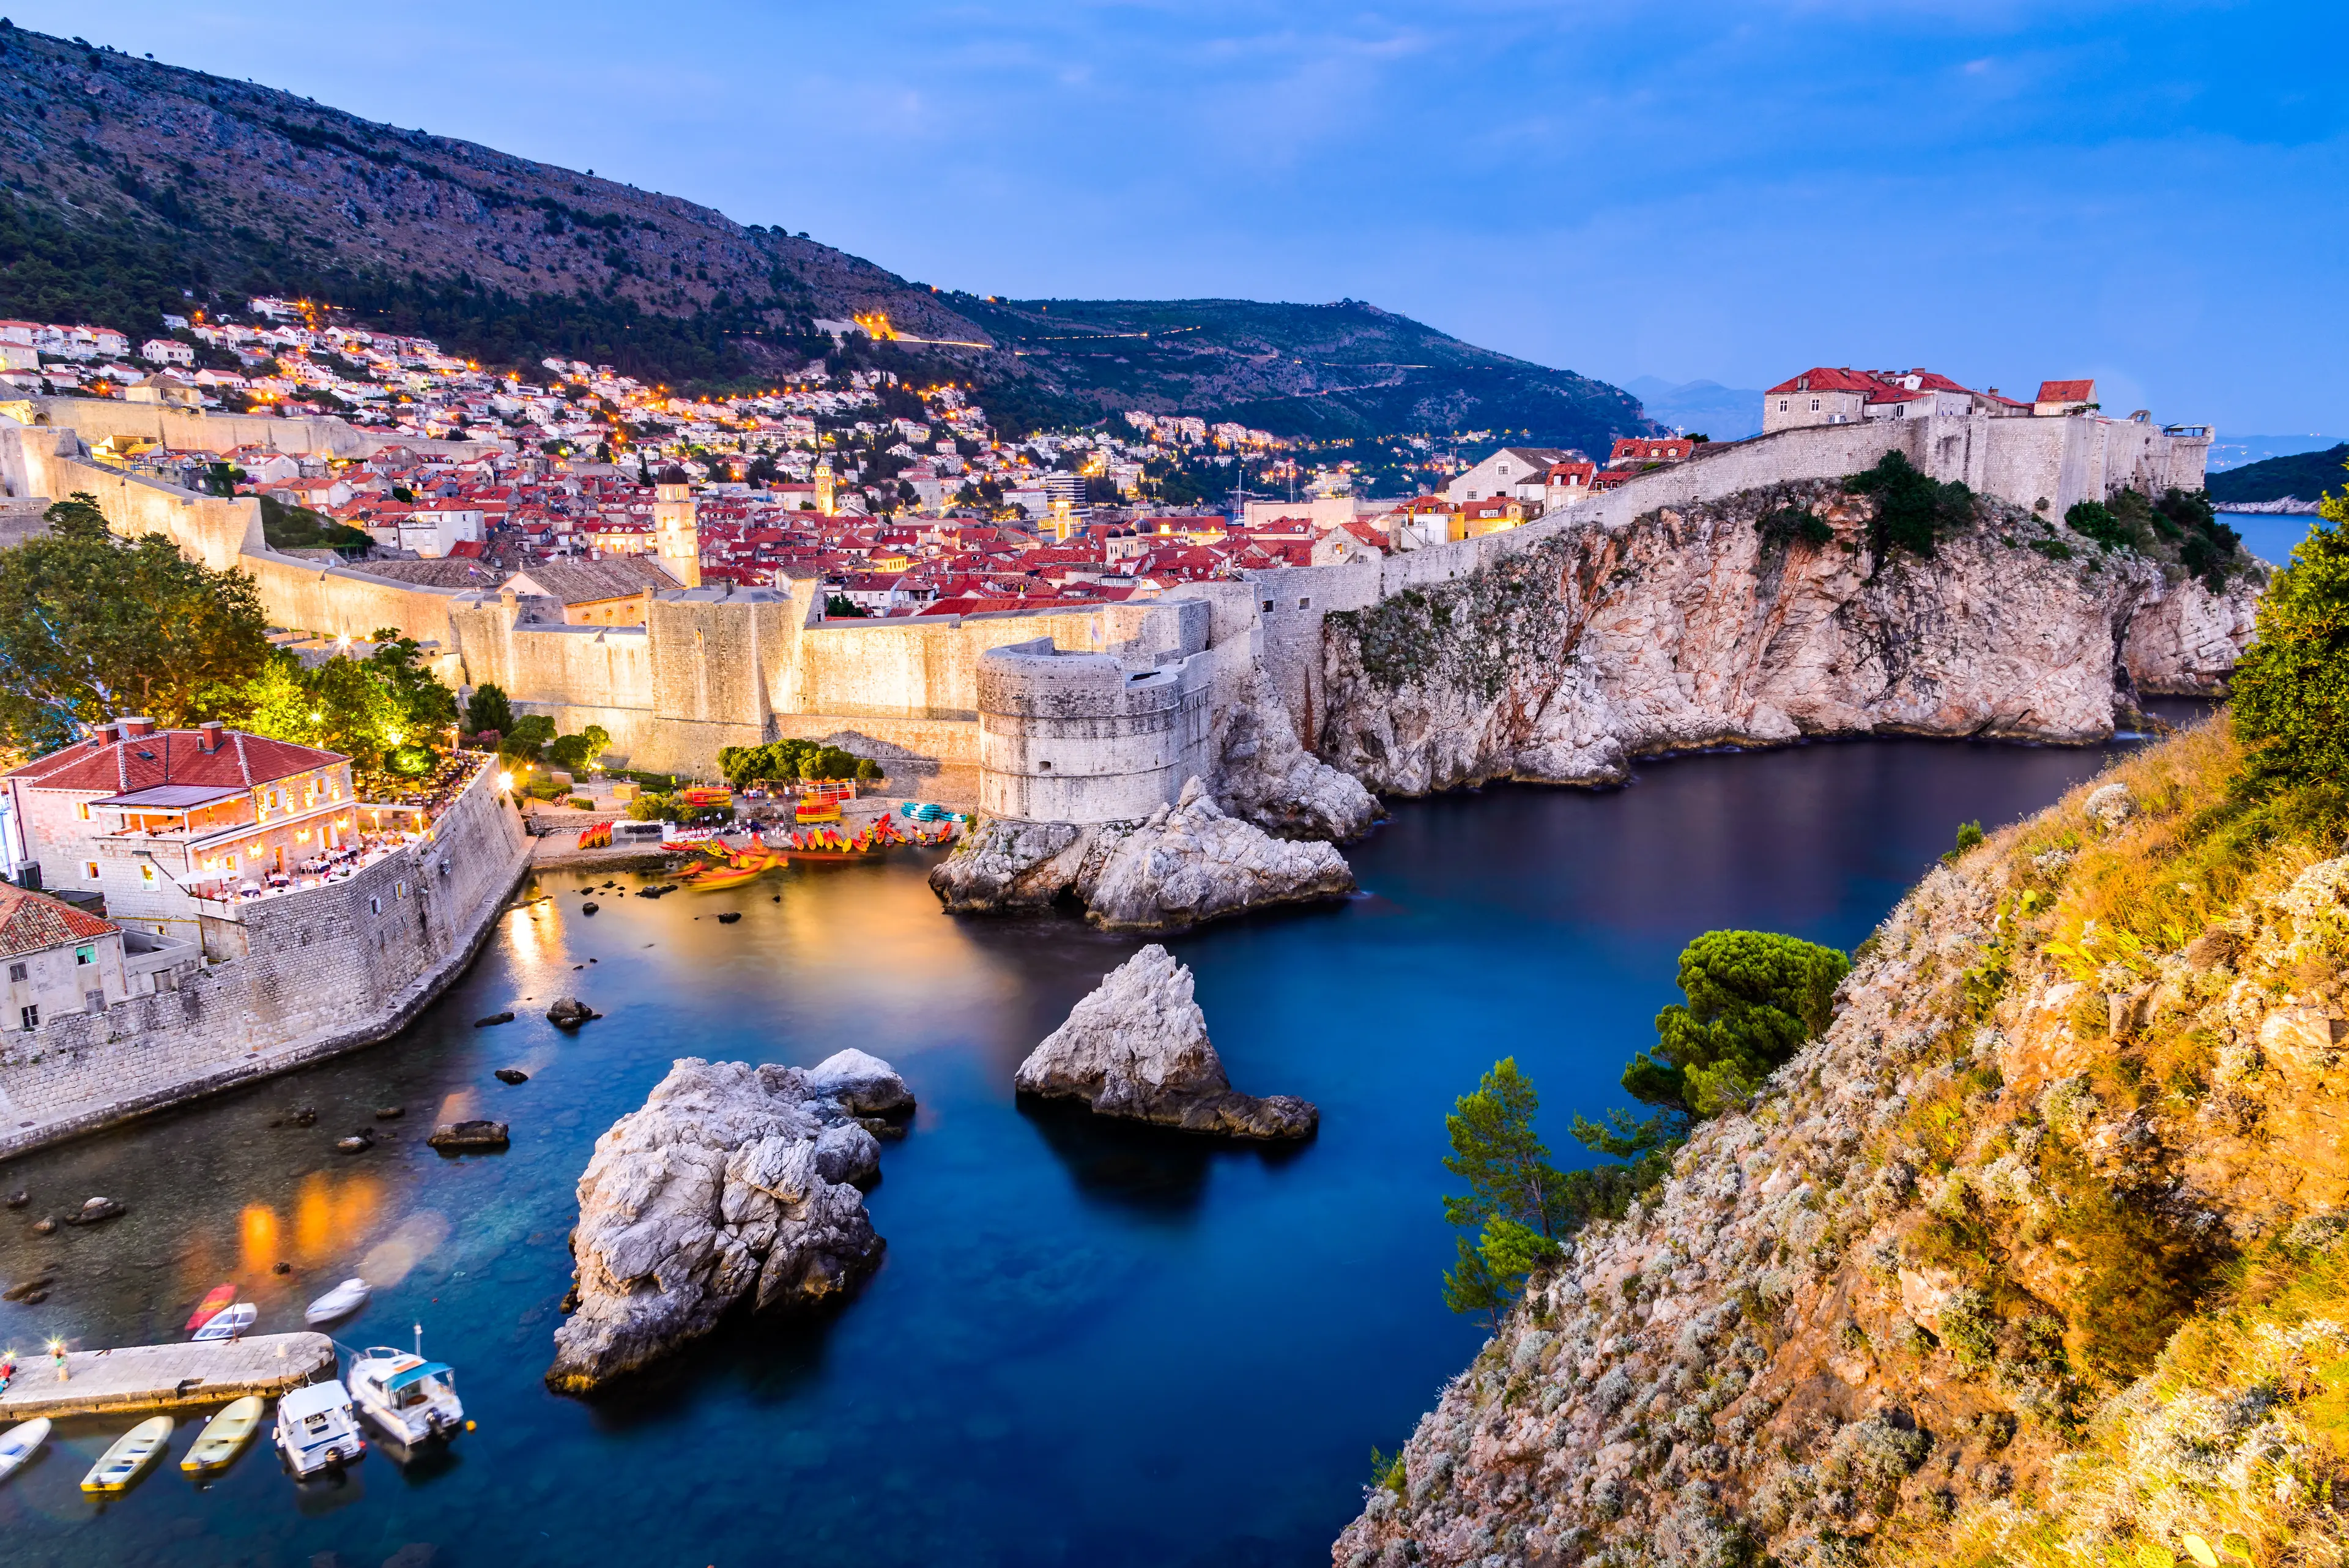 2-Day Unforgettable Dubrovnik, Croatia Adventure Guide